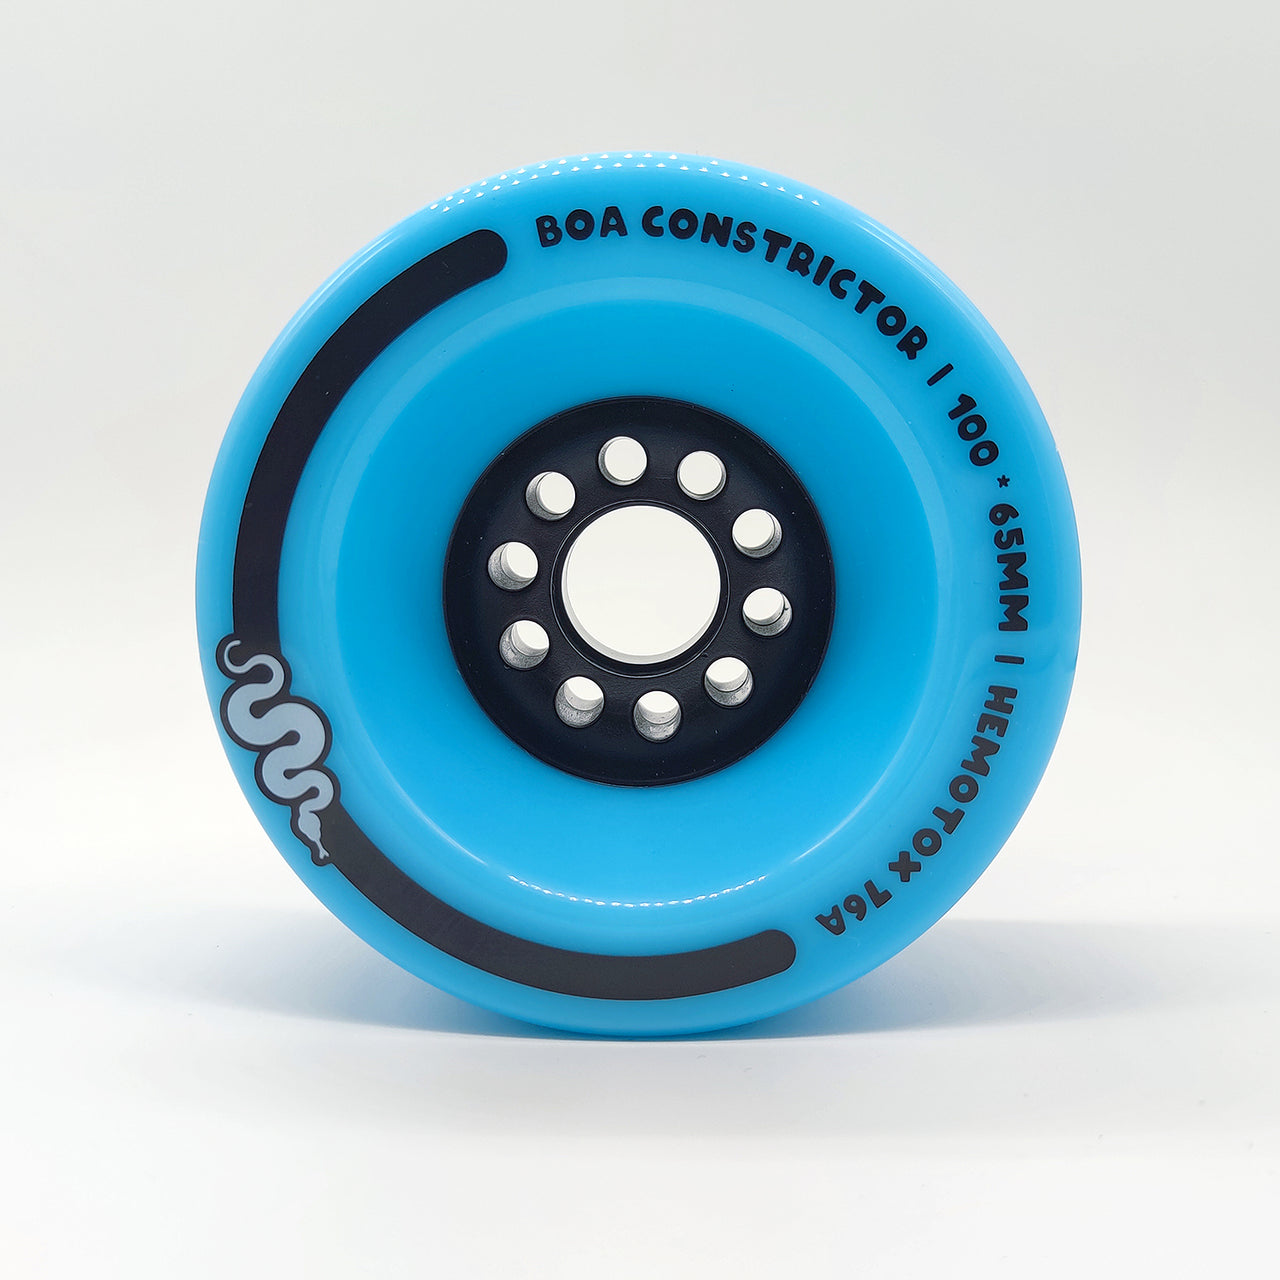 Boa Constrictor 100mm 76a ultra soft blue longboard wheels